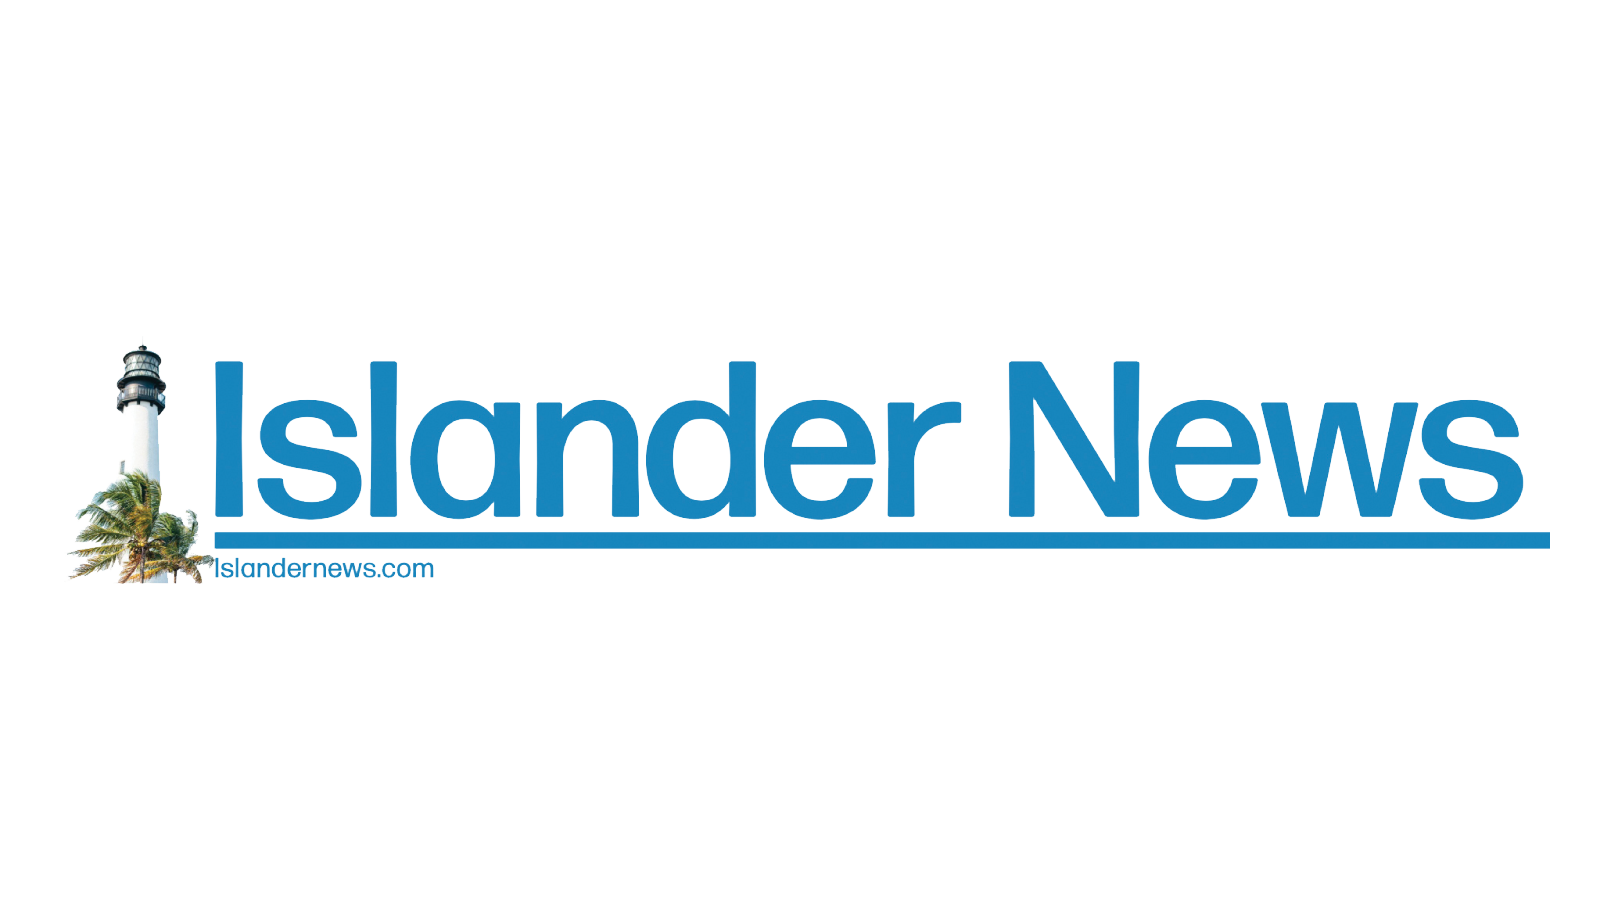 Islander News